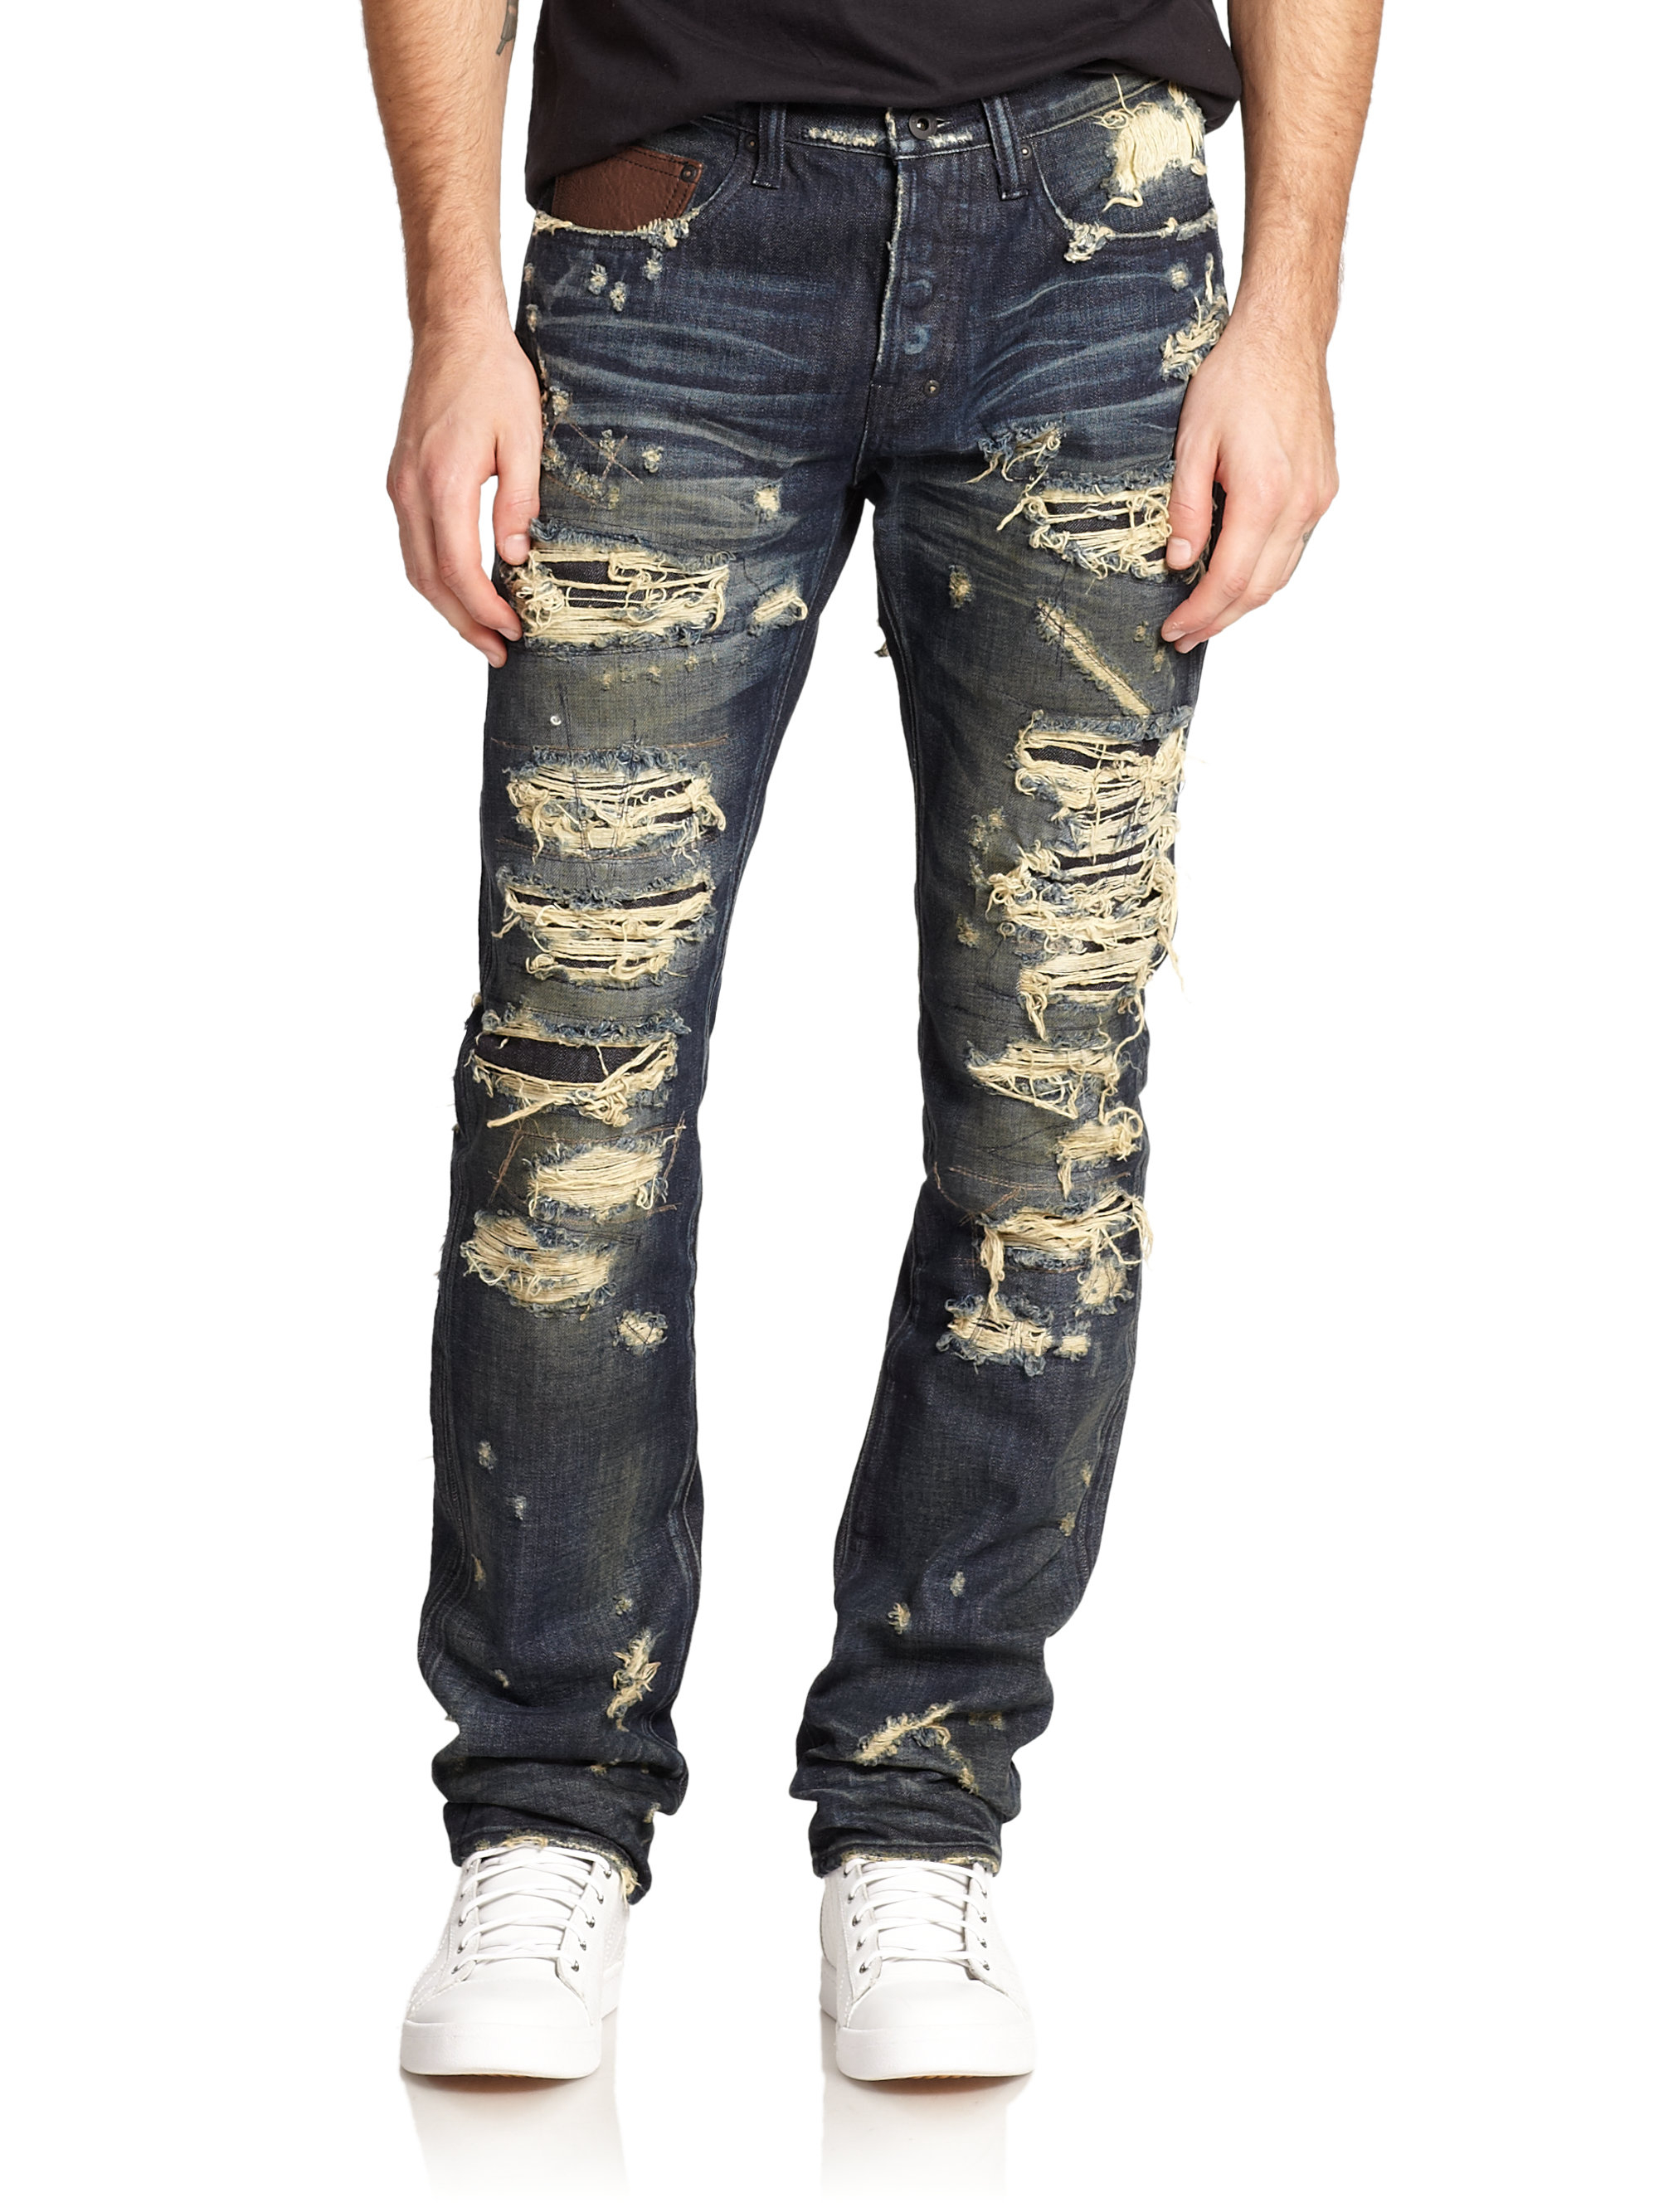 Lyst - Prps Demon Distressed Slim-fit Jeans in Blue for Men